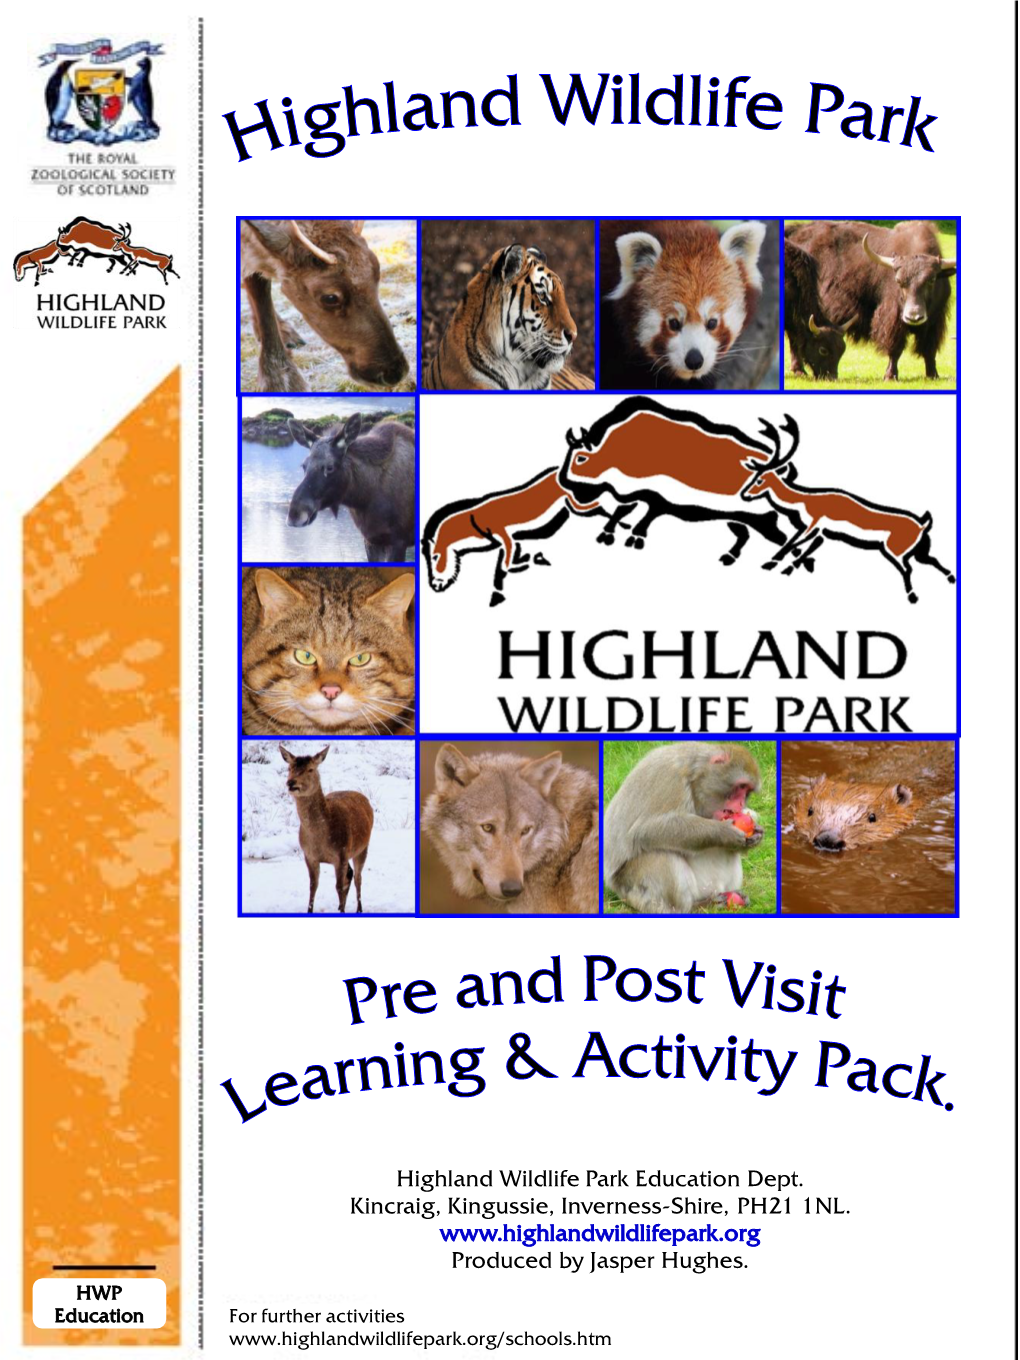 Highland Wildlife Park Education Dept. Kincraig, Kingussie, Inverness-Shire, PH21 1NL